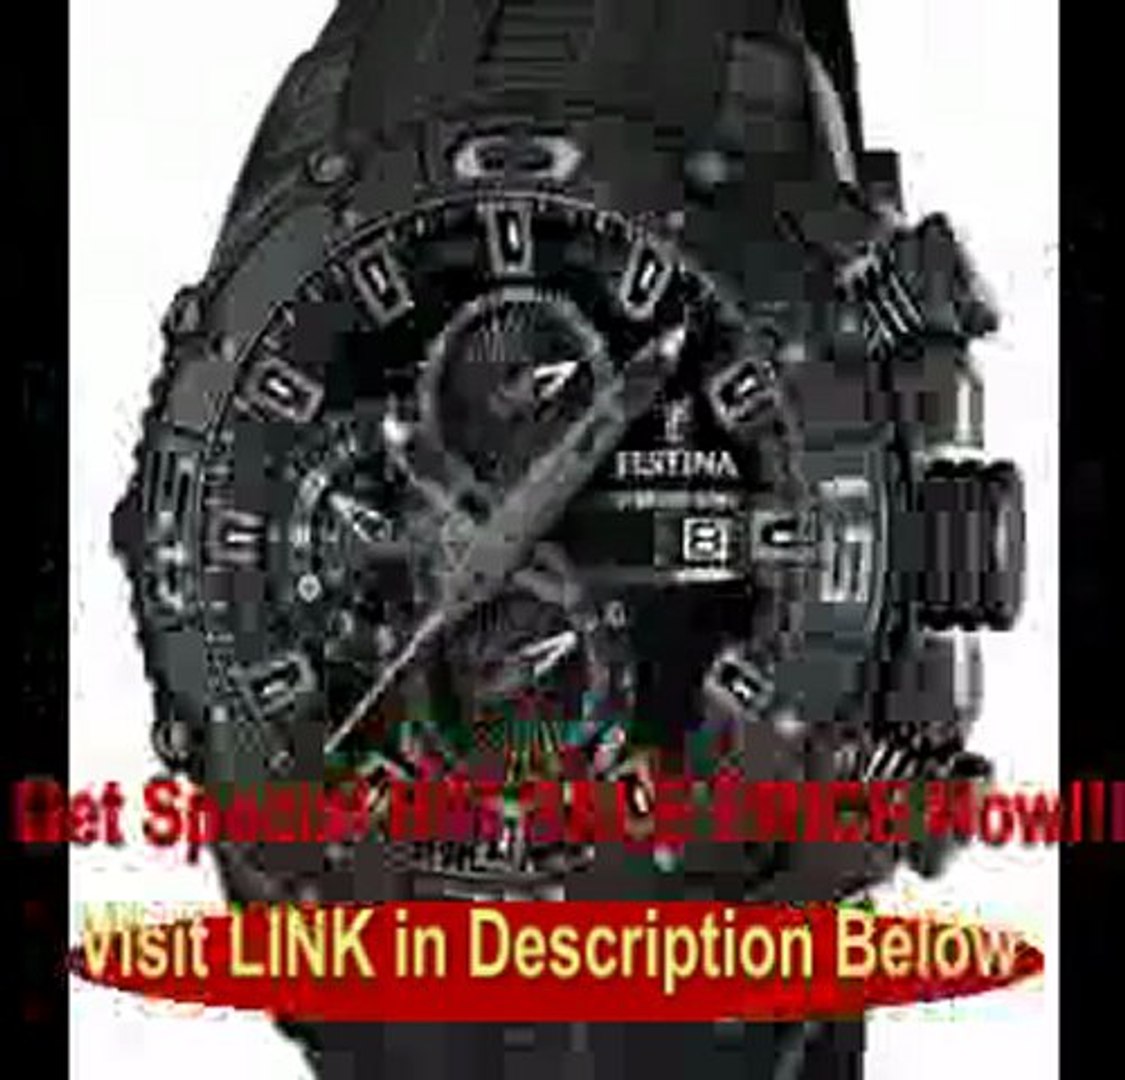 NEW Festina Chronograph Bike Tour De France 2012 Limited Edition Men's  Watch F16602/1 Best Price - video Dailymotion